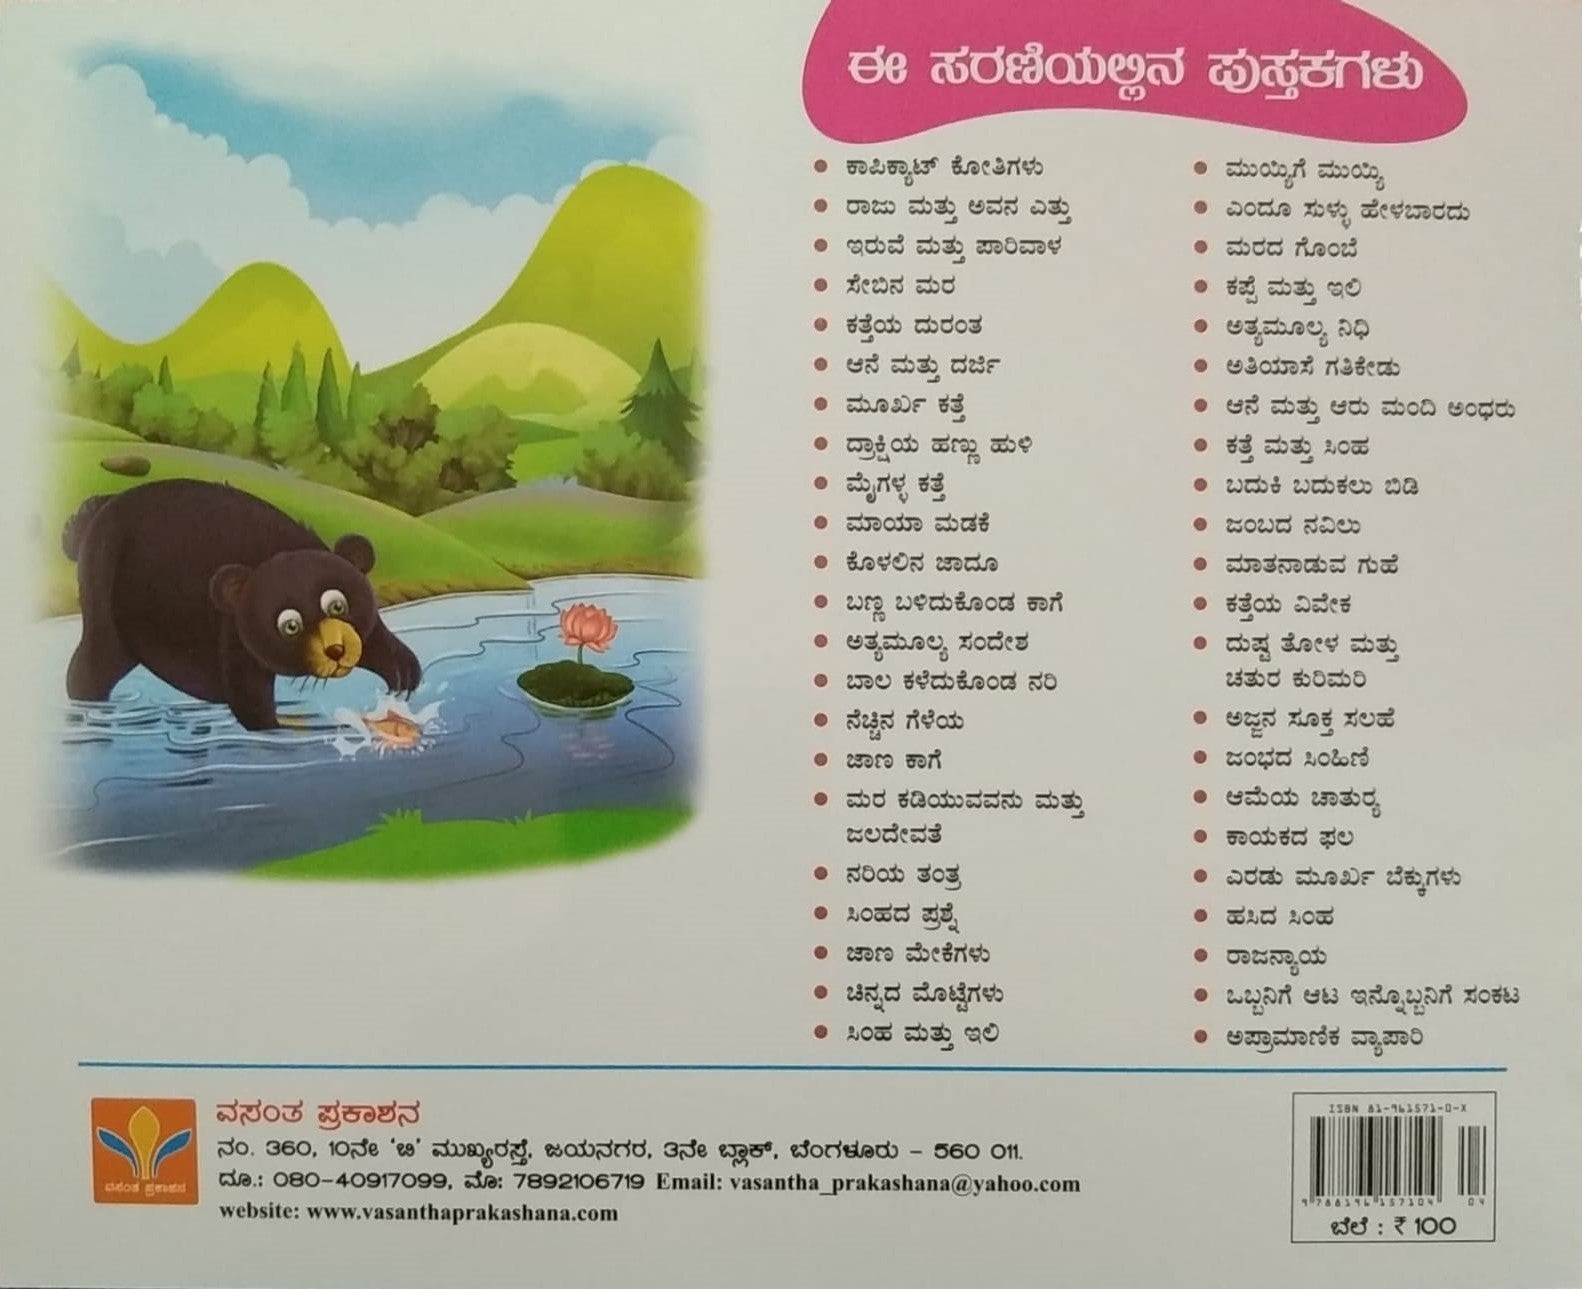 Katteya Viveka is a Book of Children's Stories, Edited by S. Pattabhirama, Published by Vasantha Prakashana